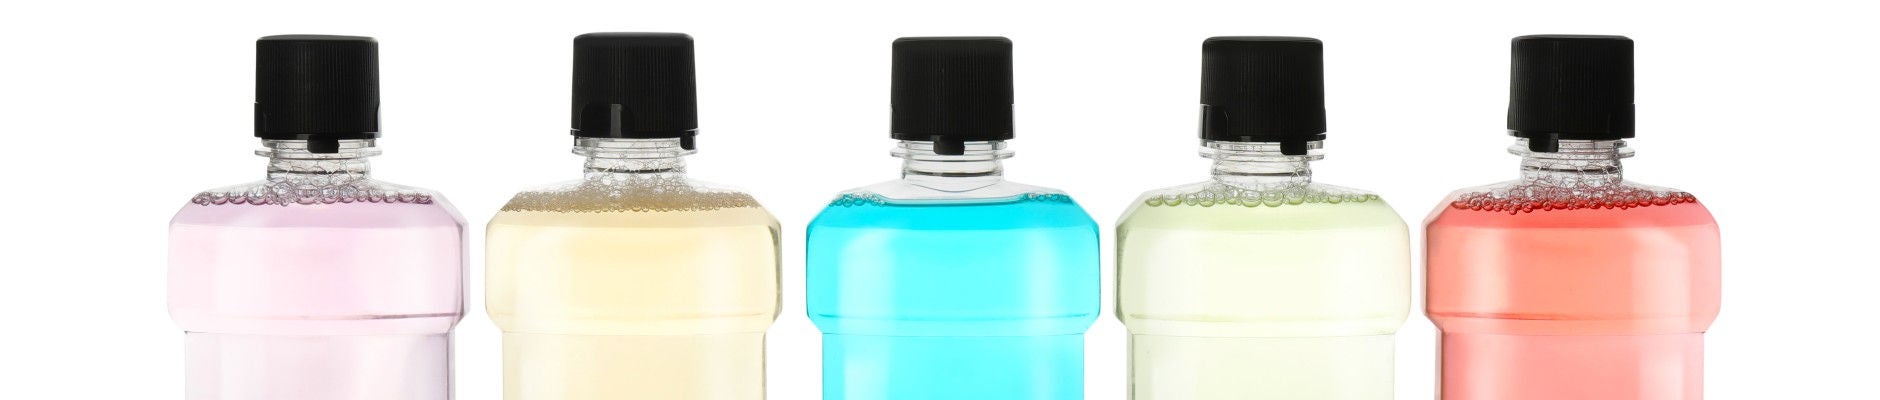 five colorful bottles of mouthwash